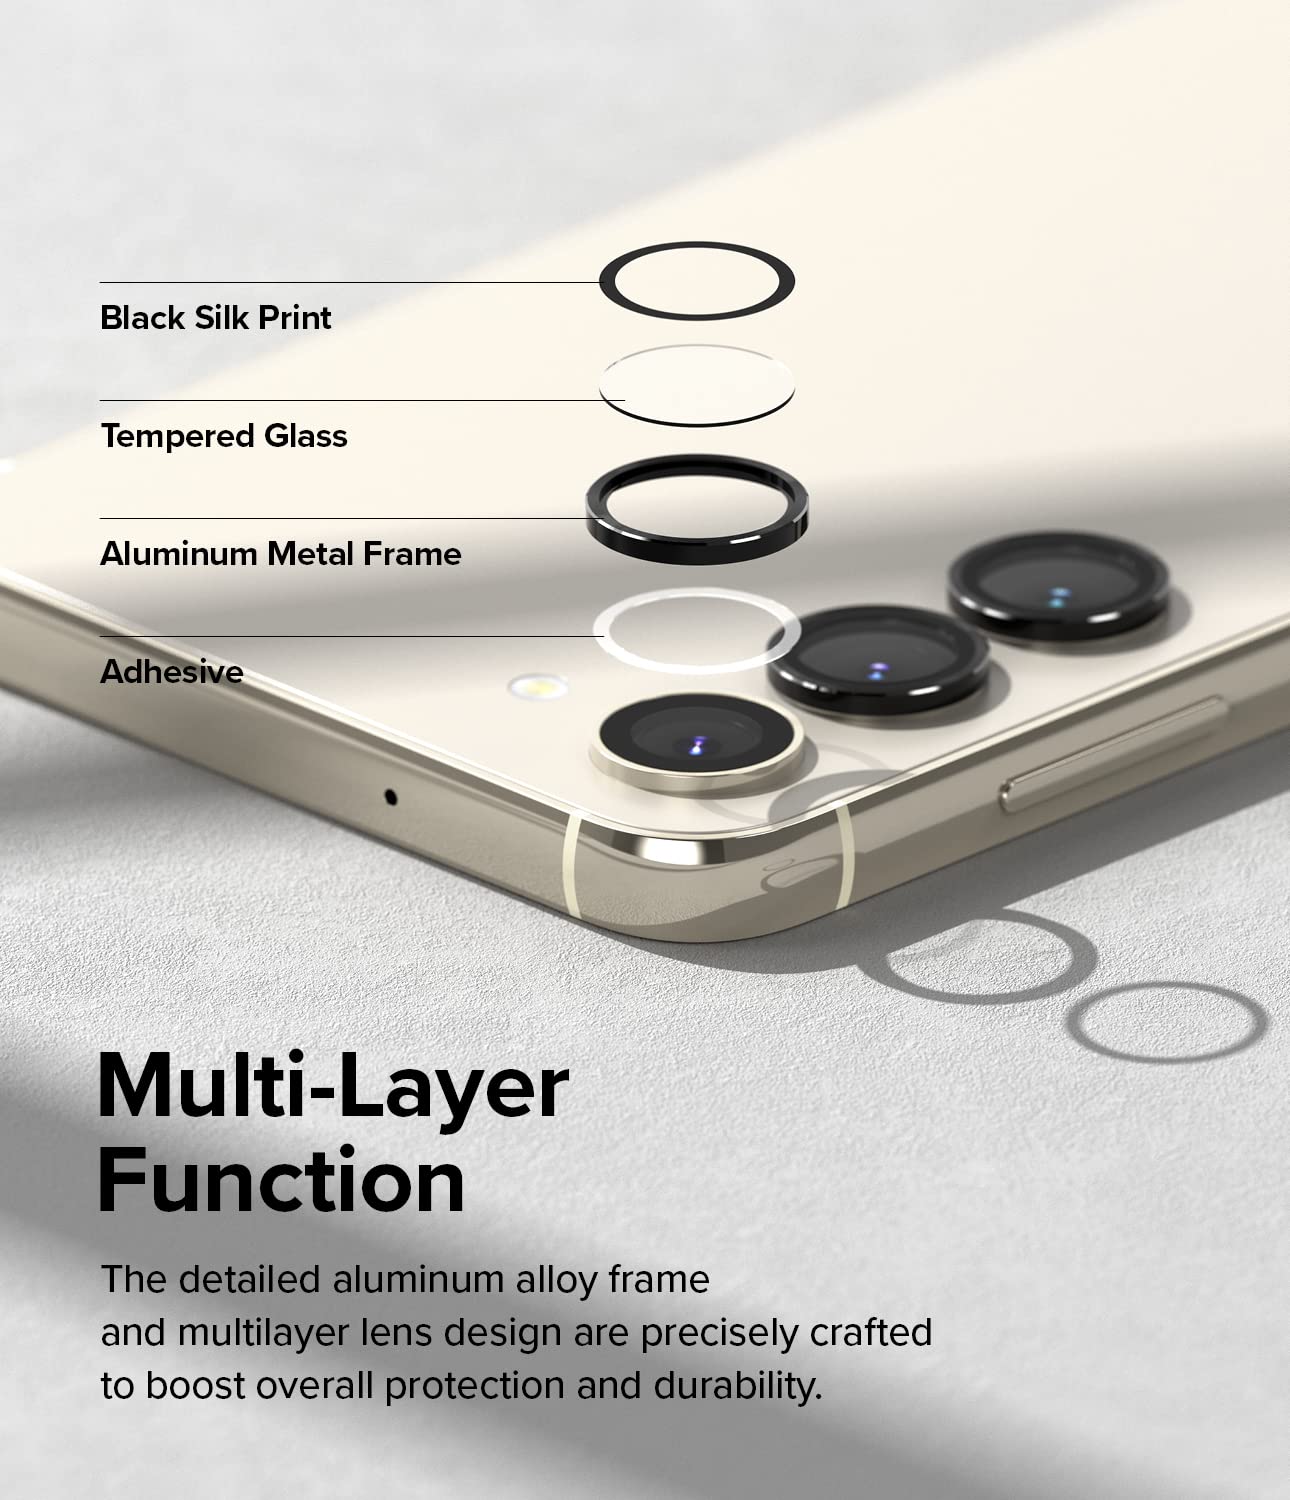 Galaxy S23 Ultra Lens Protector | Camera Lens Frame Glass